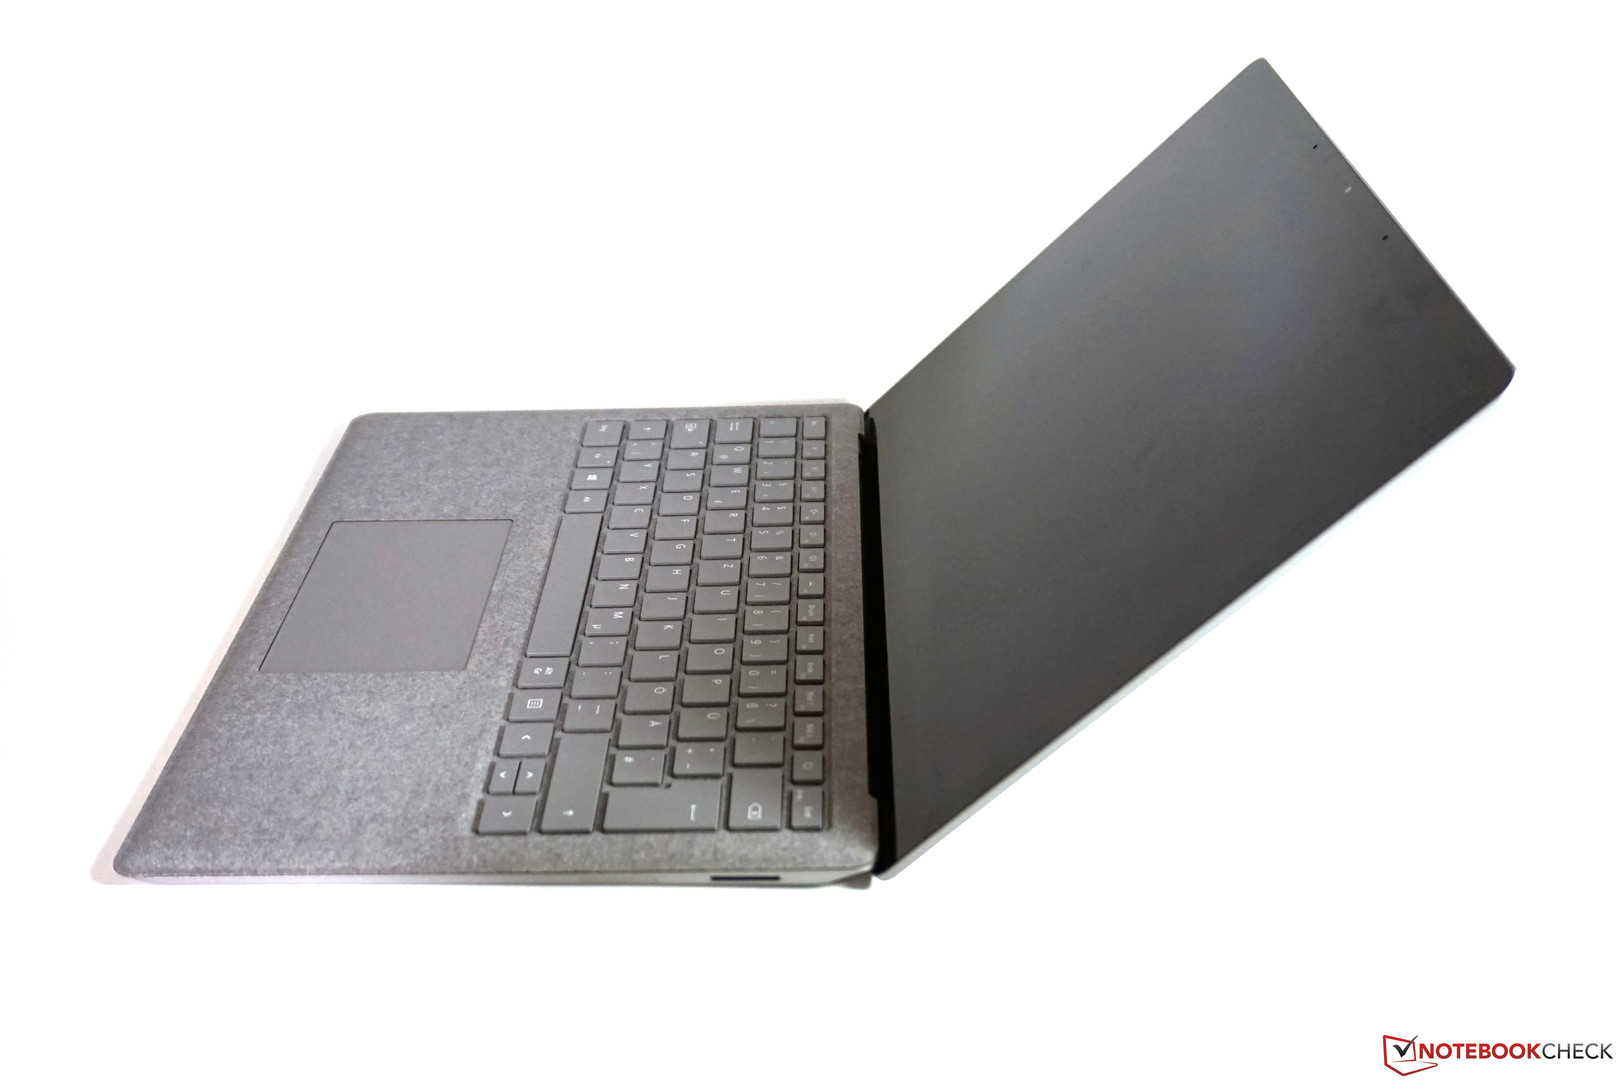 Review - Microsoft Surface Laptop 2 มันก็สวยนะ แต่ก็แพงหน่อย ที่สุด